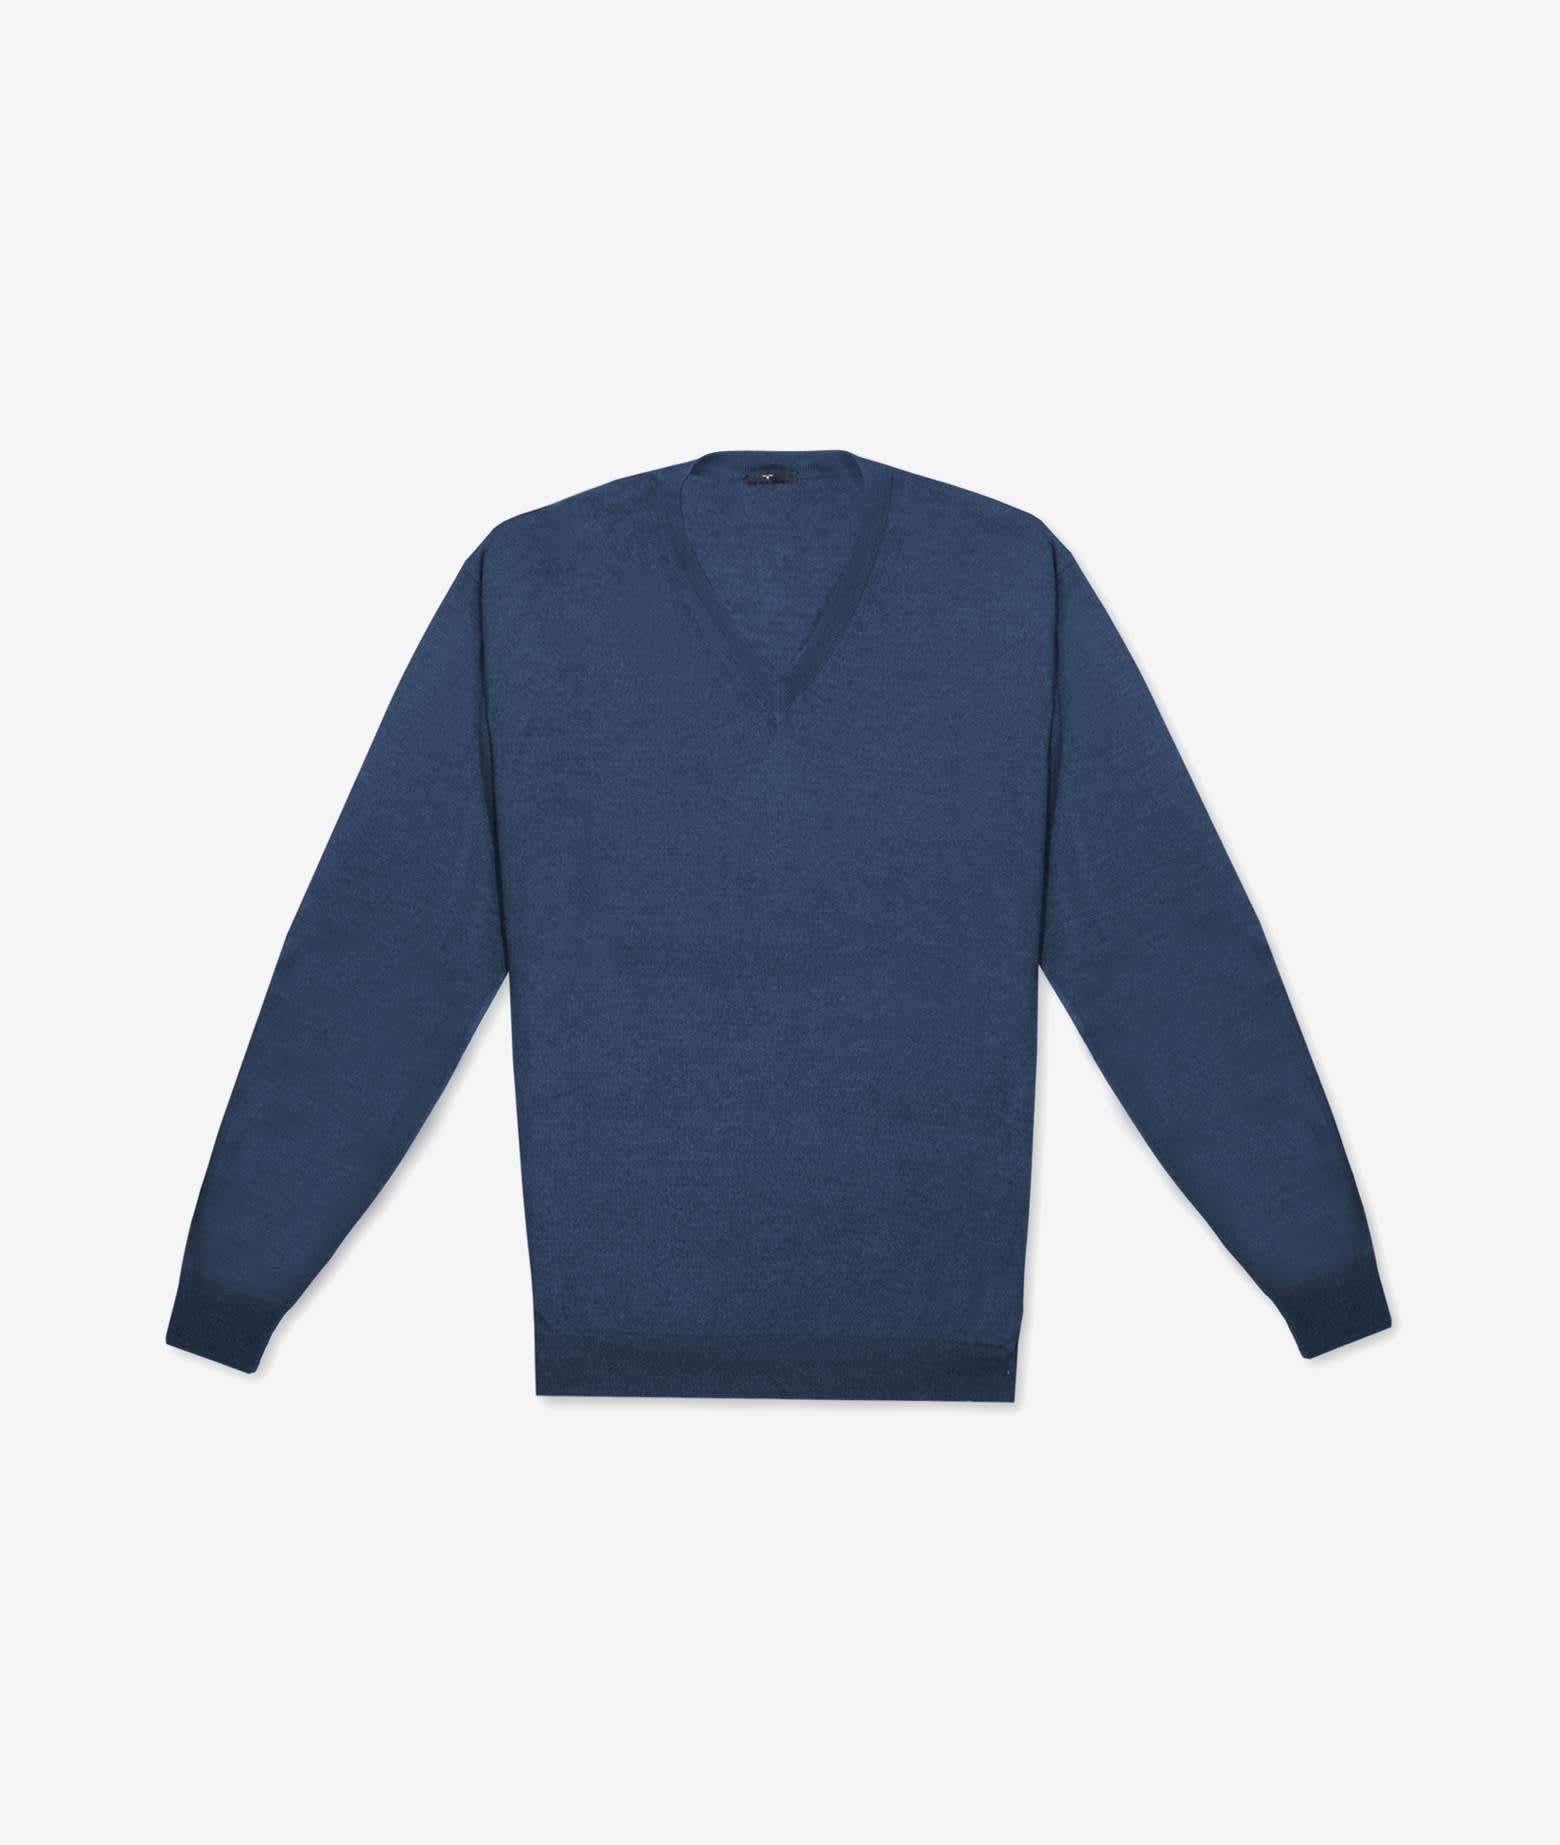 V-neck Sweater pullman Sweater